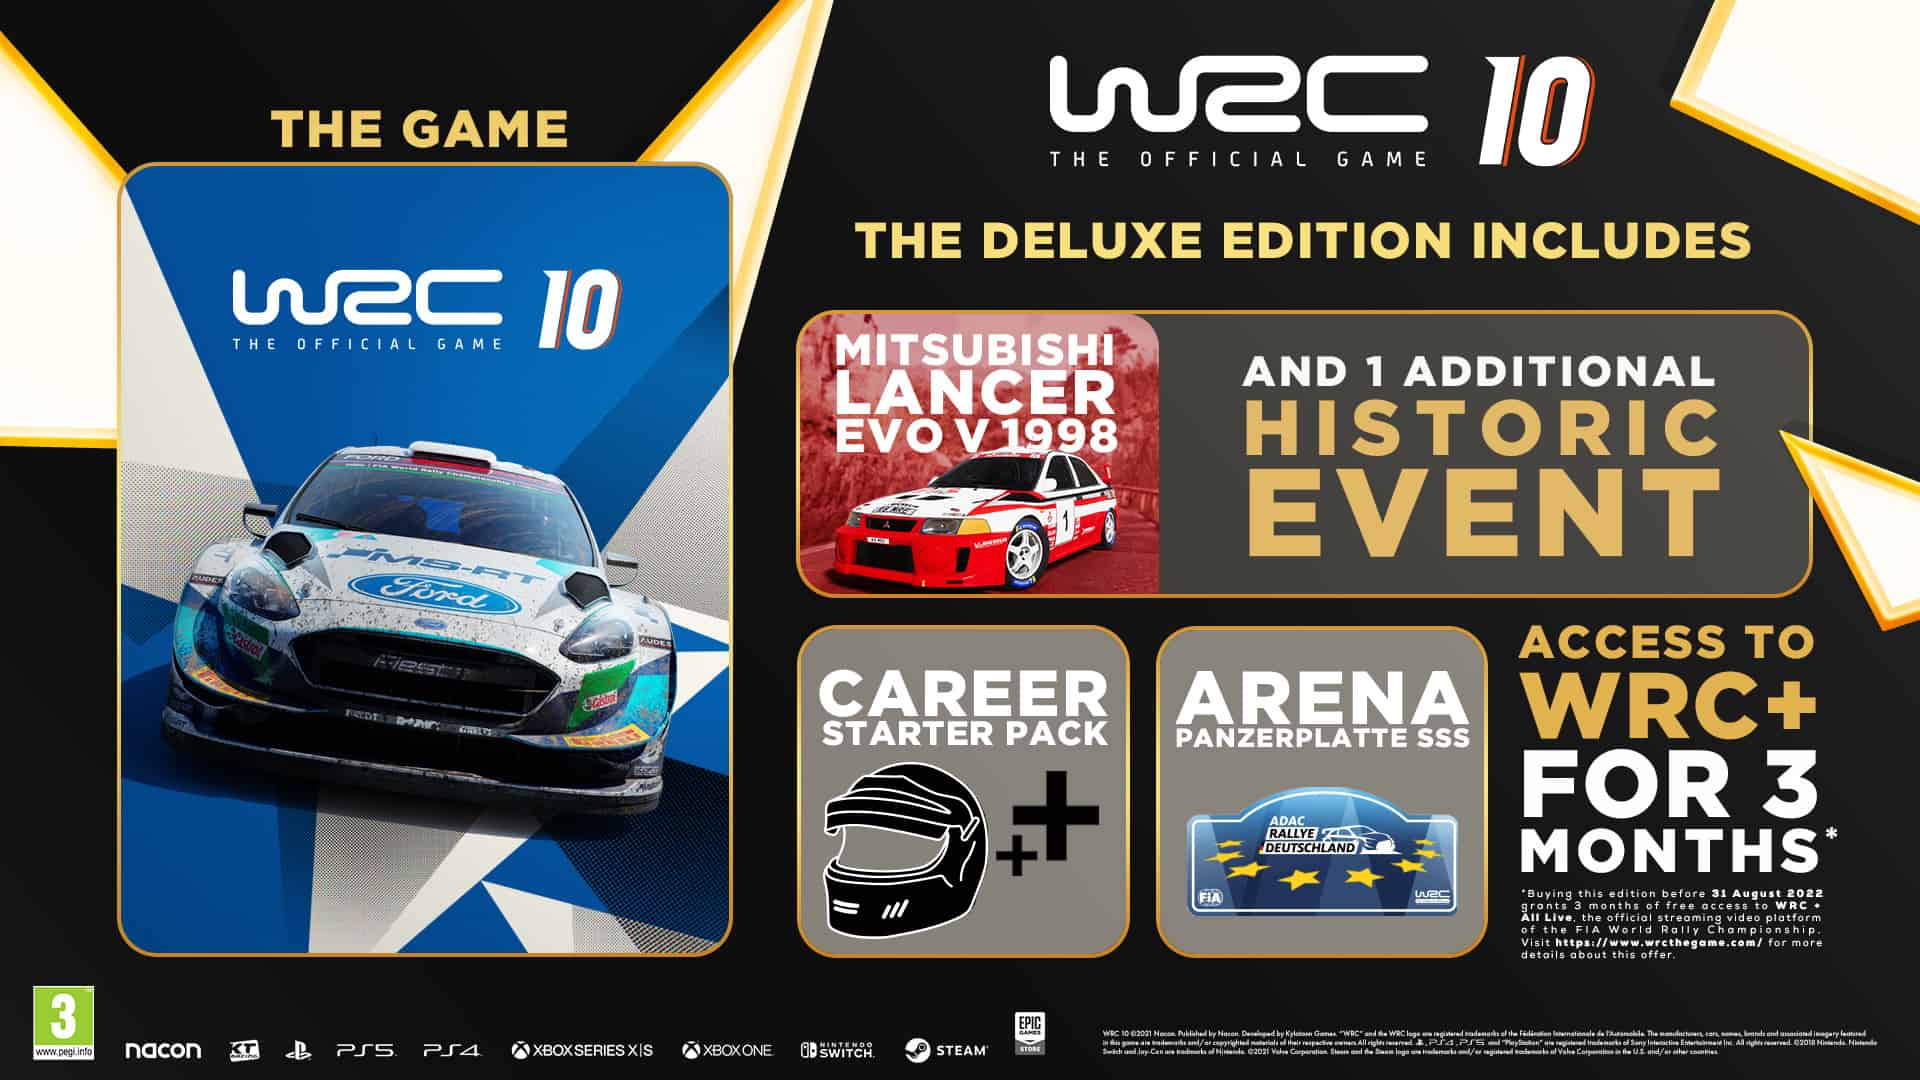 wrc 10 fia world rally championship deluxe edition